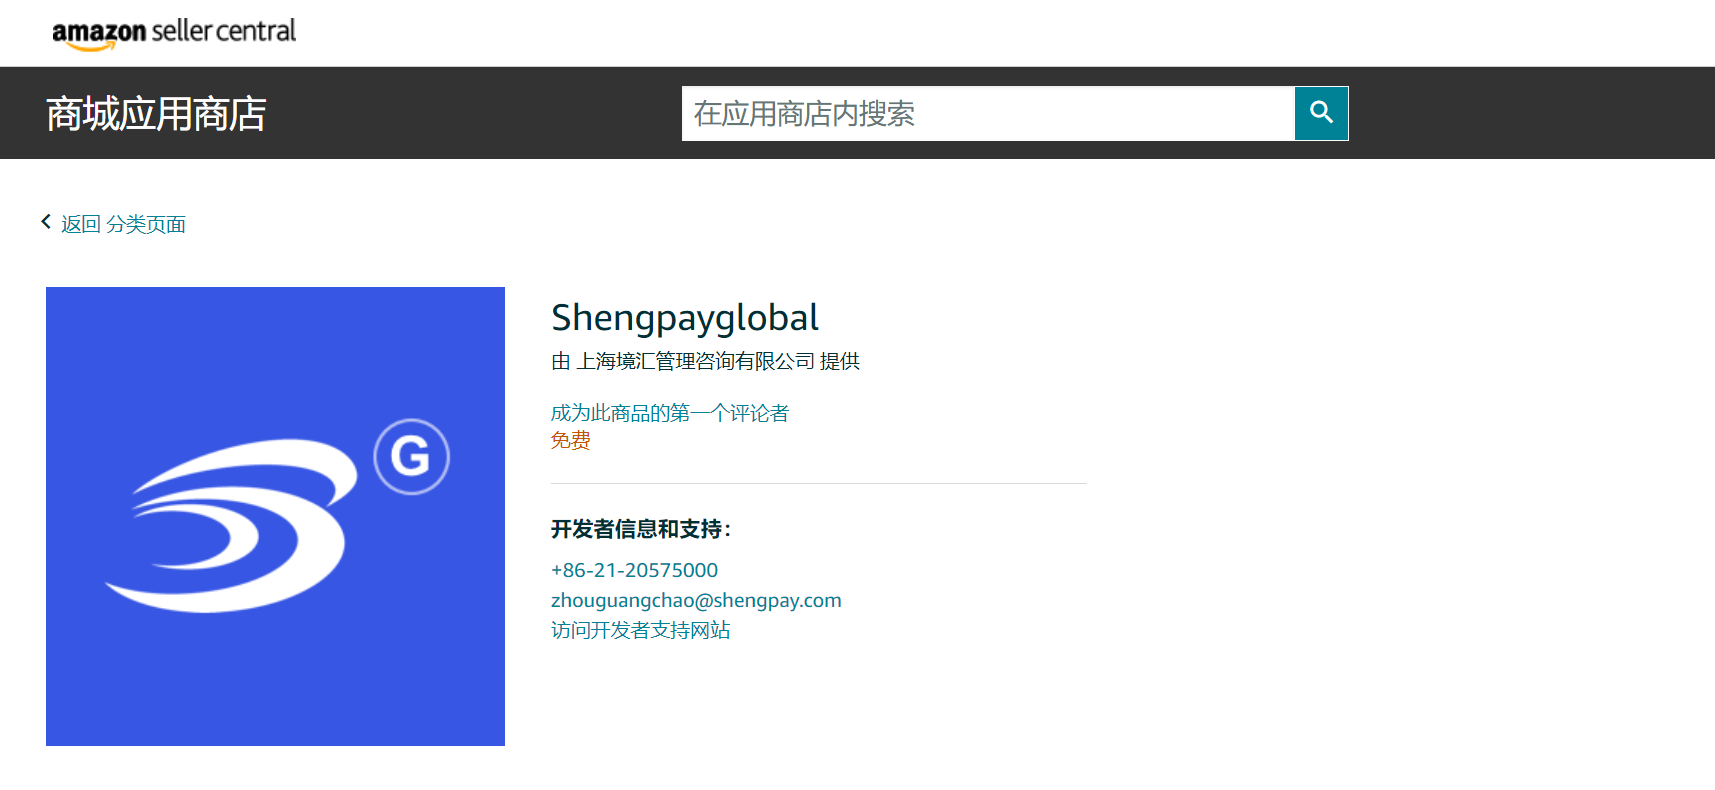 Shengpayglobal